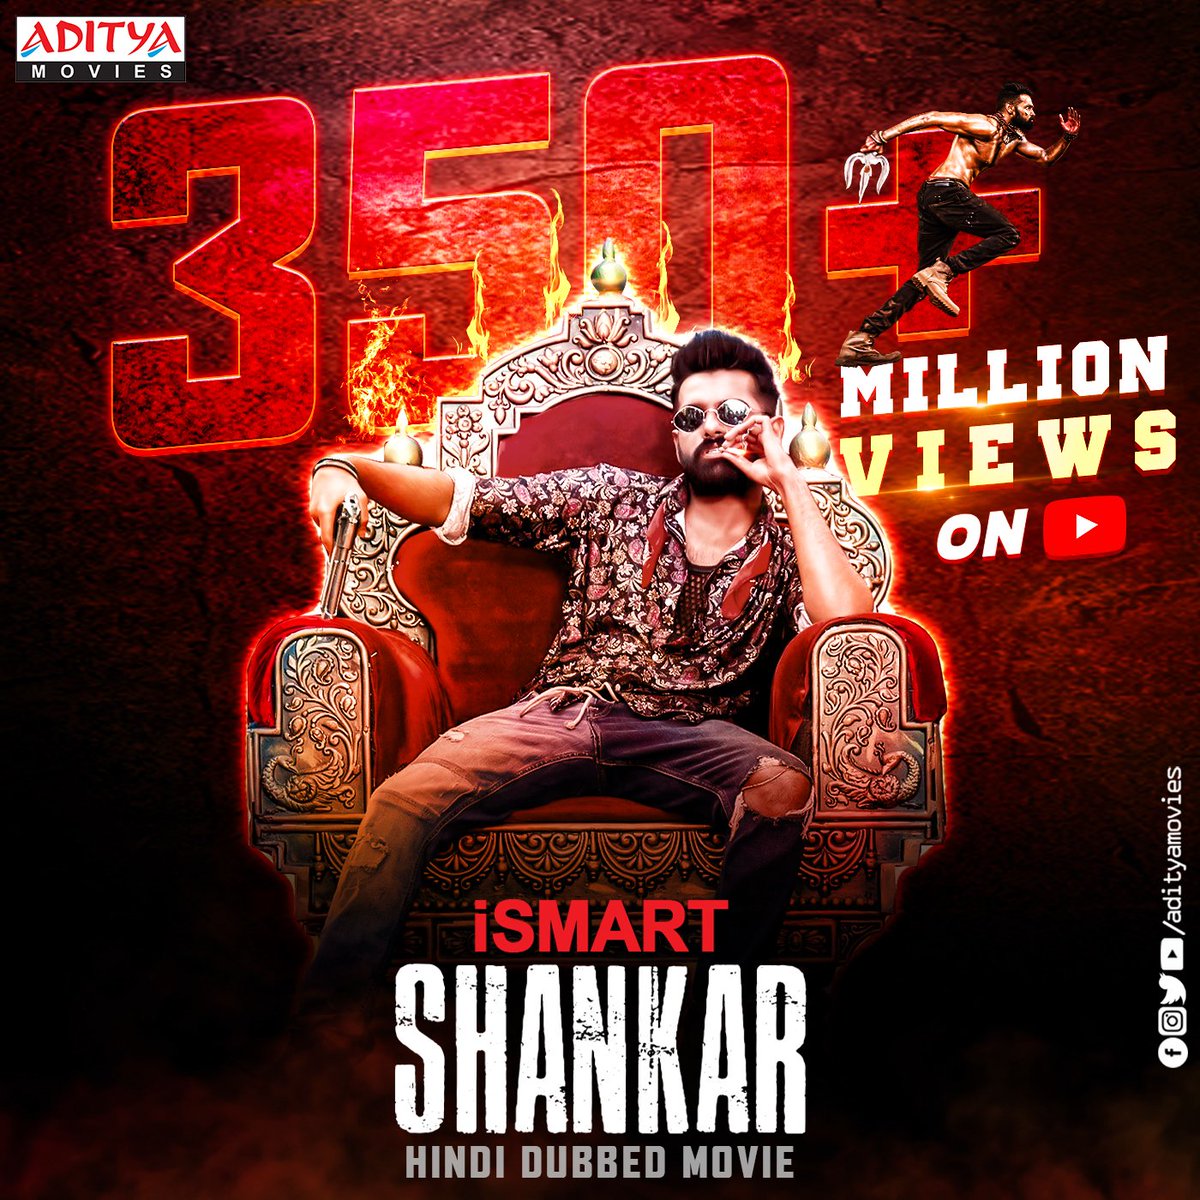 #IsmartShankar (Hindi) Dubbed Movie Hits 350 Million+ Views on #YouTube

- youtu.be/Gtx1pPeKJsA

#Rampothineni #Nabhanatesh #PuriJagannadh #Nidhiaggerwal #AdityaMovies